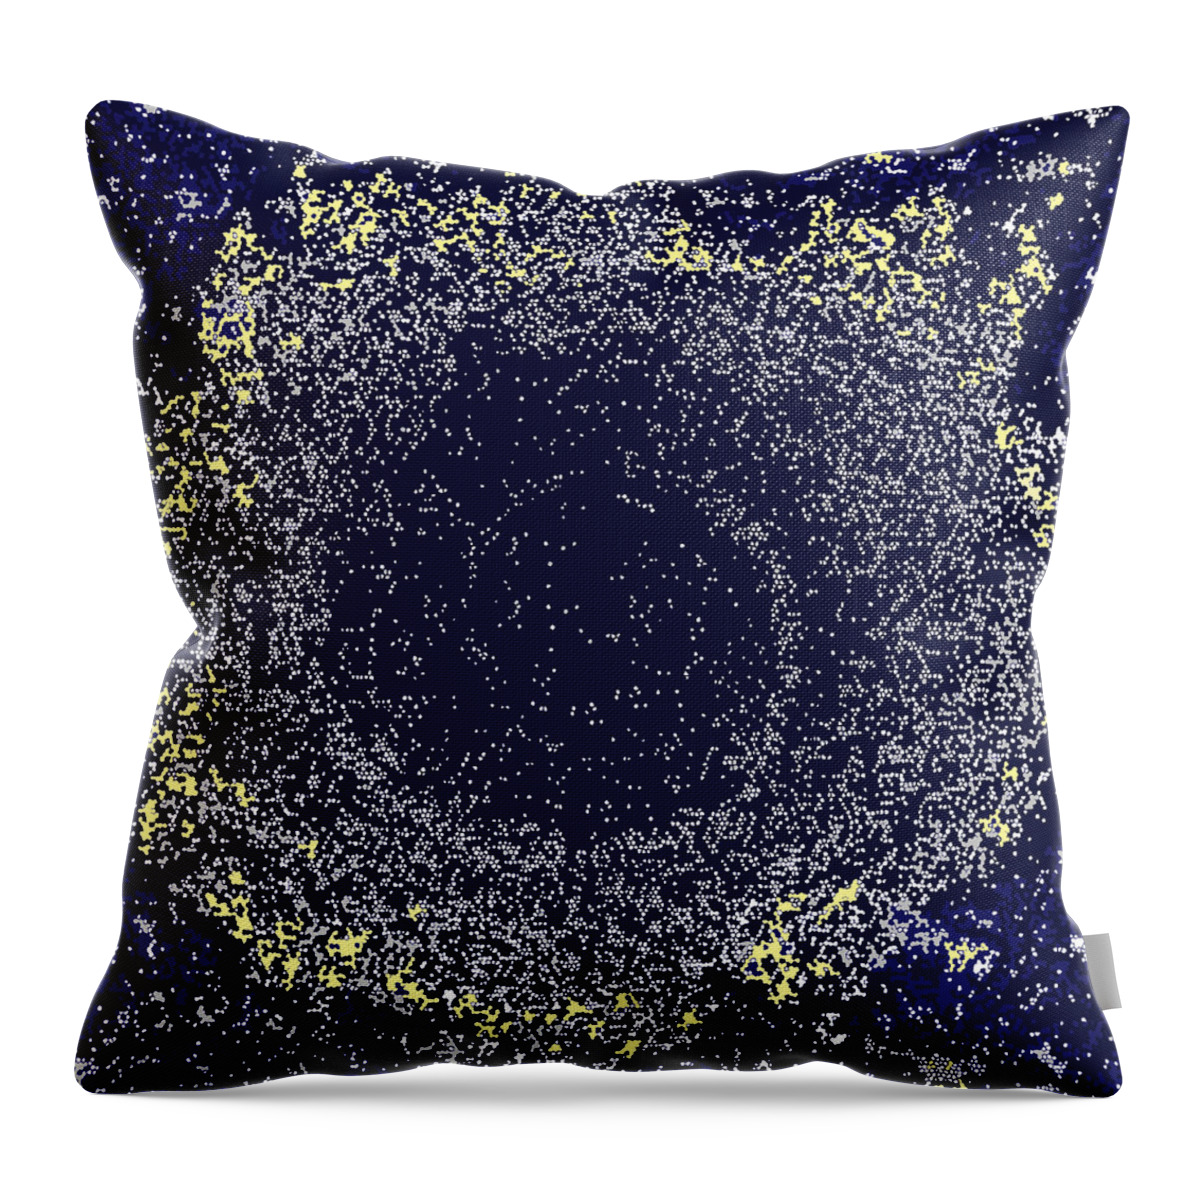 Galaxy Throw Pillow featuring the digital art Mosaic Galaxy Midnight Blue by Joy McKenzie